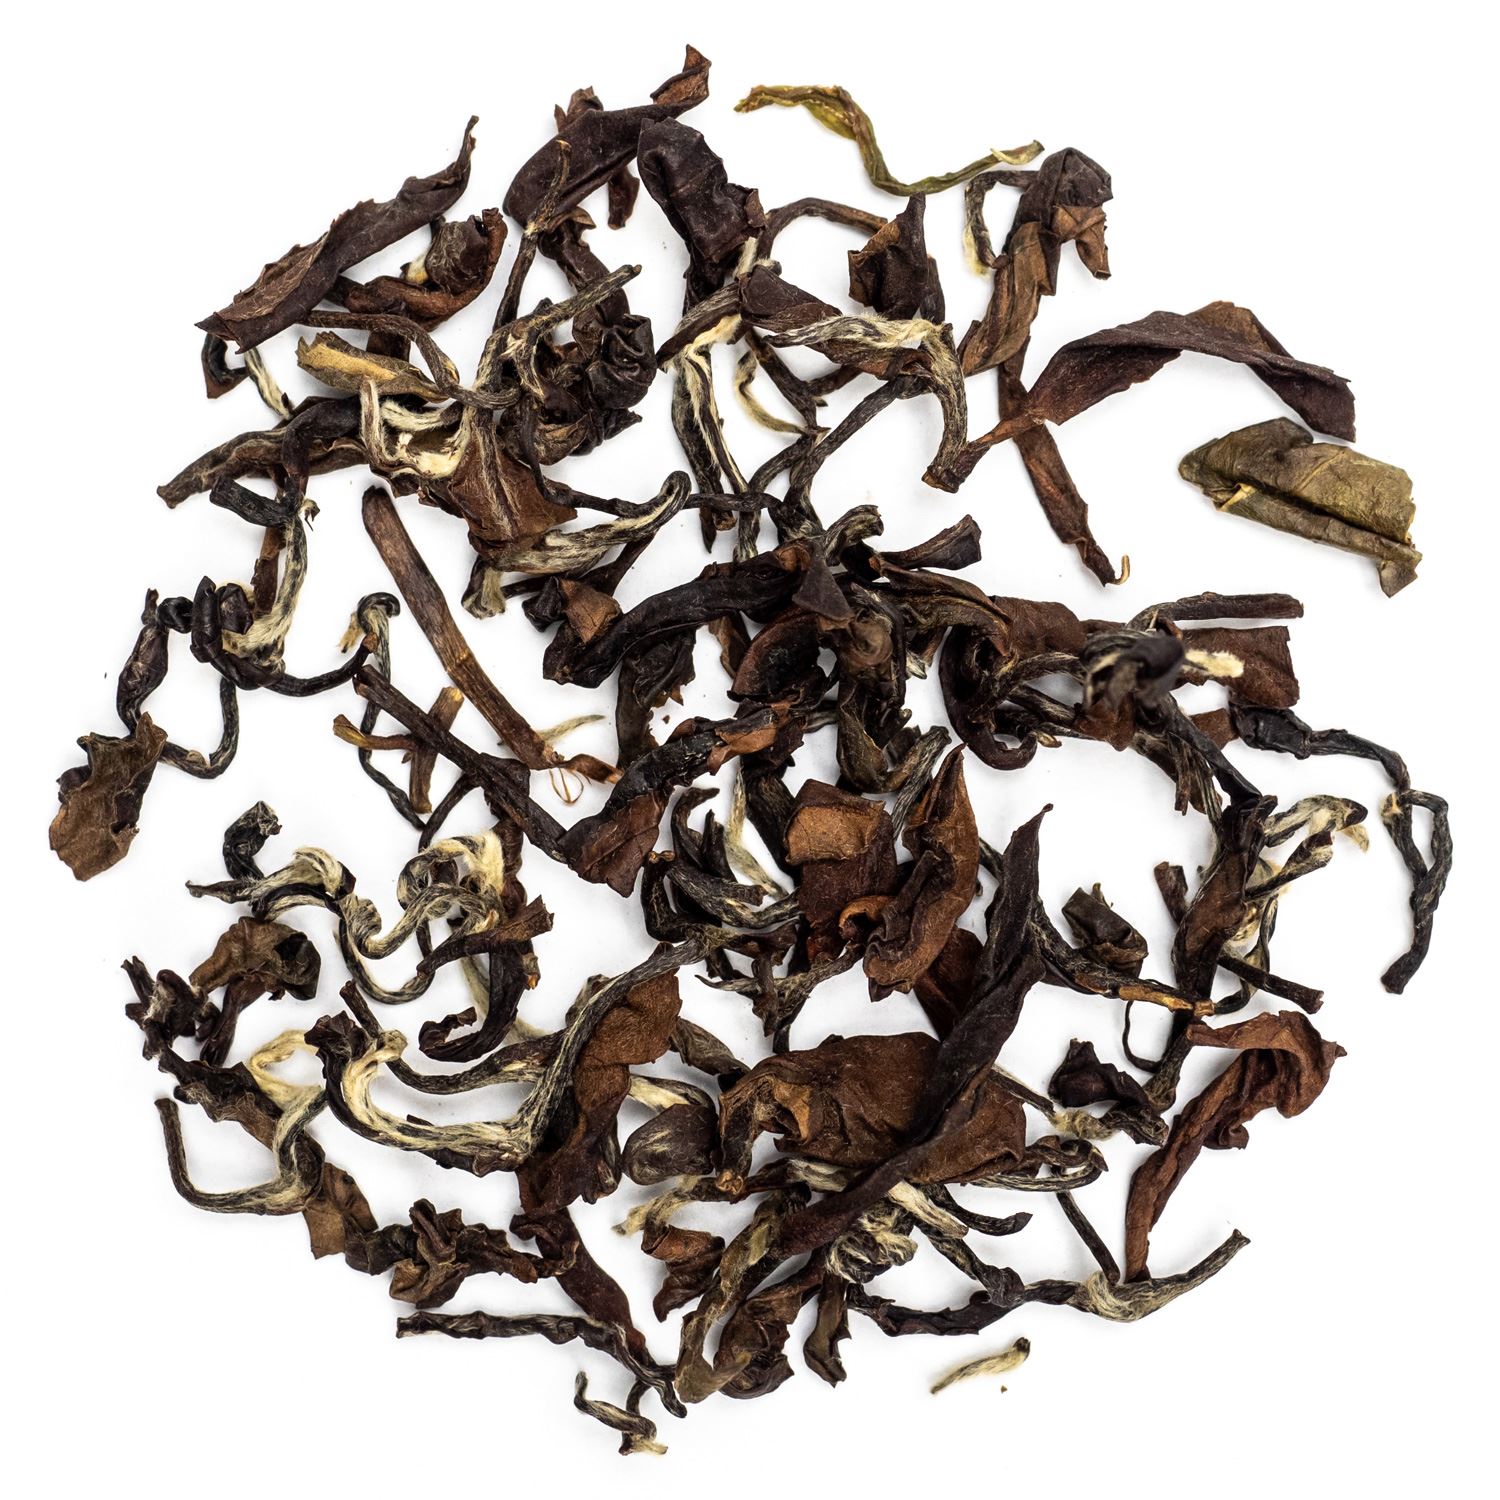 Dong Fang Meiren Tea Health Benefits, Recipe, Side Effects